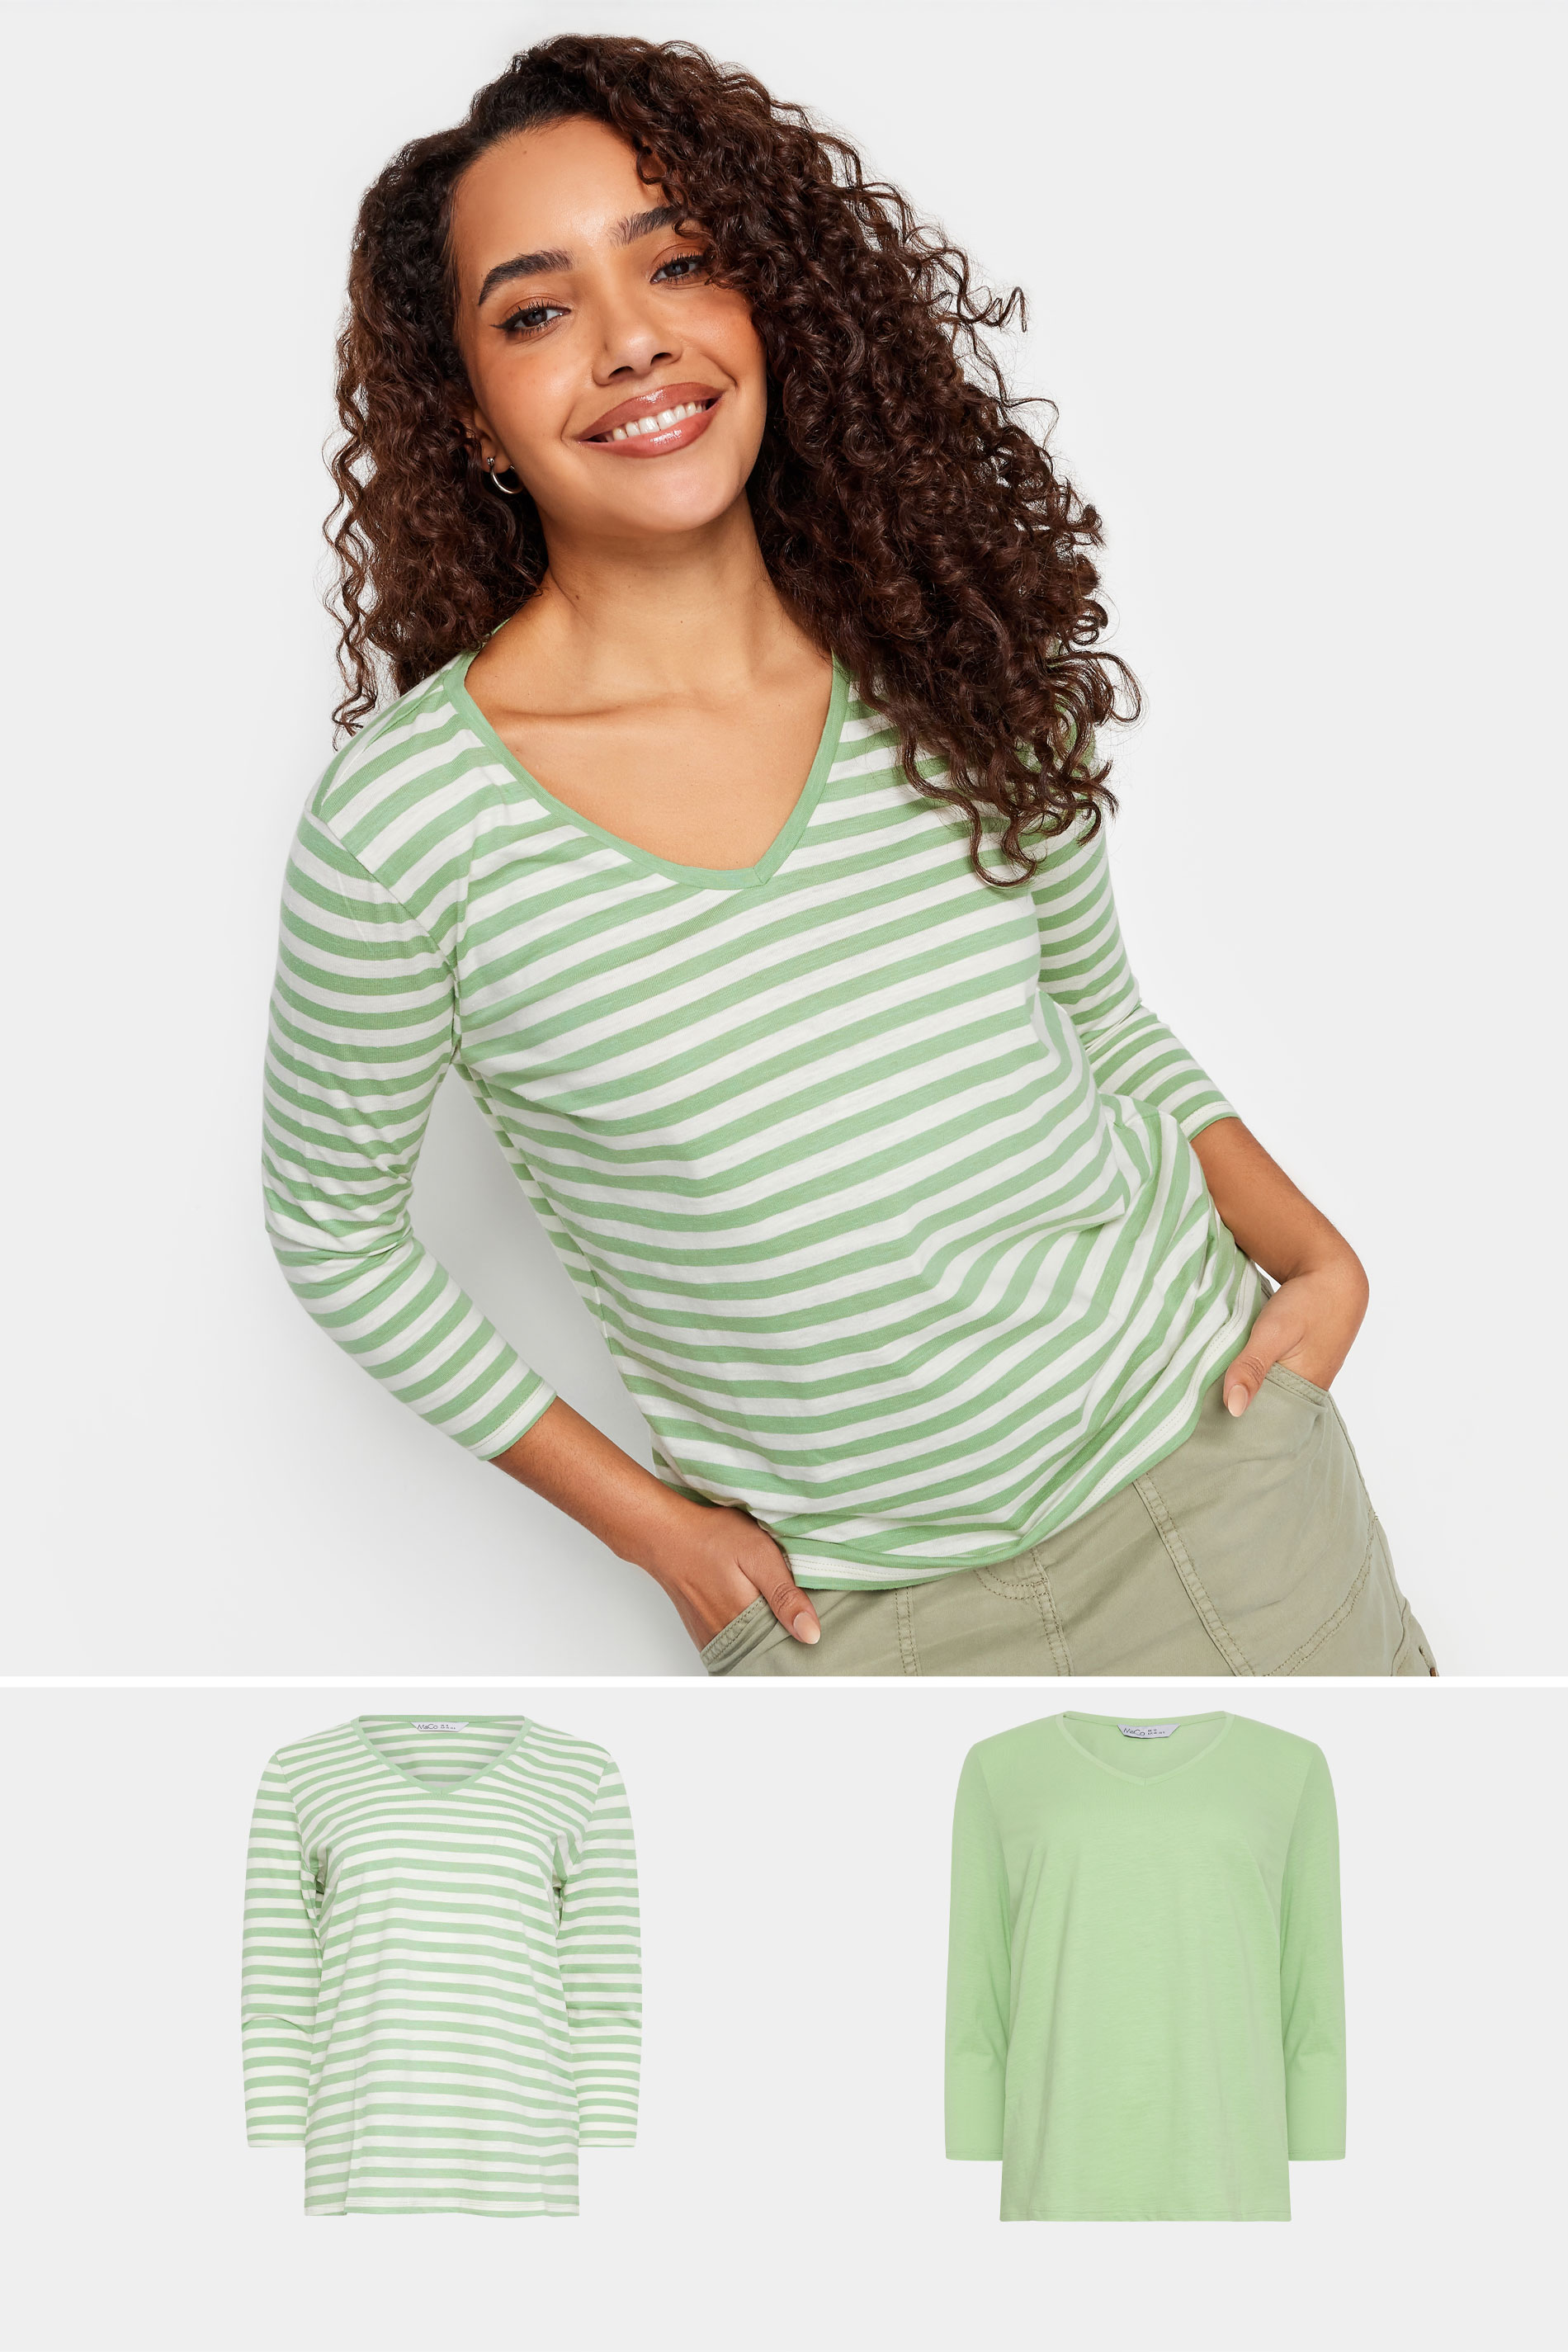 M&Co 2 Pack Green Plain & Stripe V-Neck Cotton T-Shirts | M&Co 1